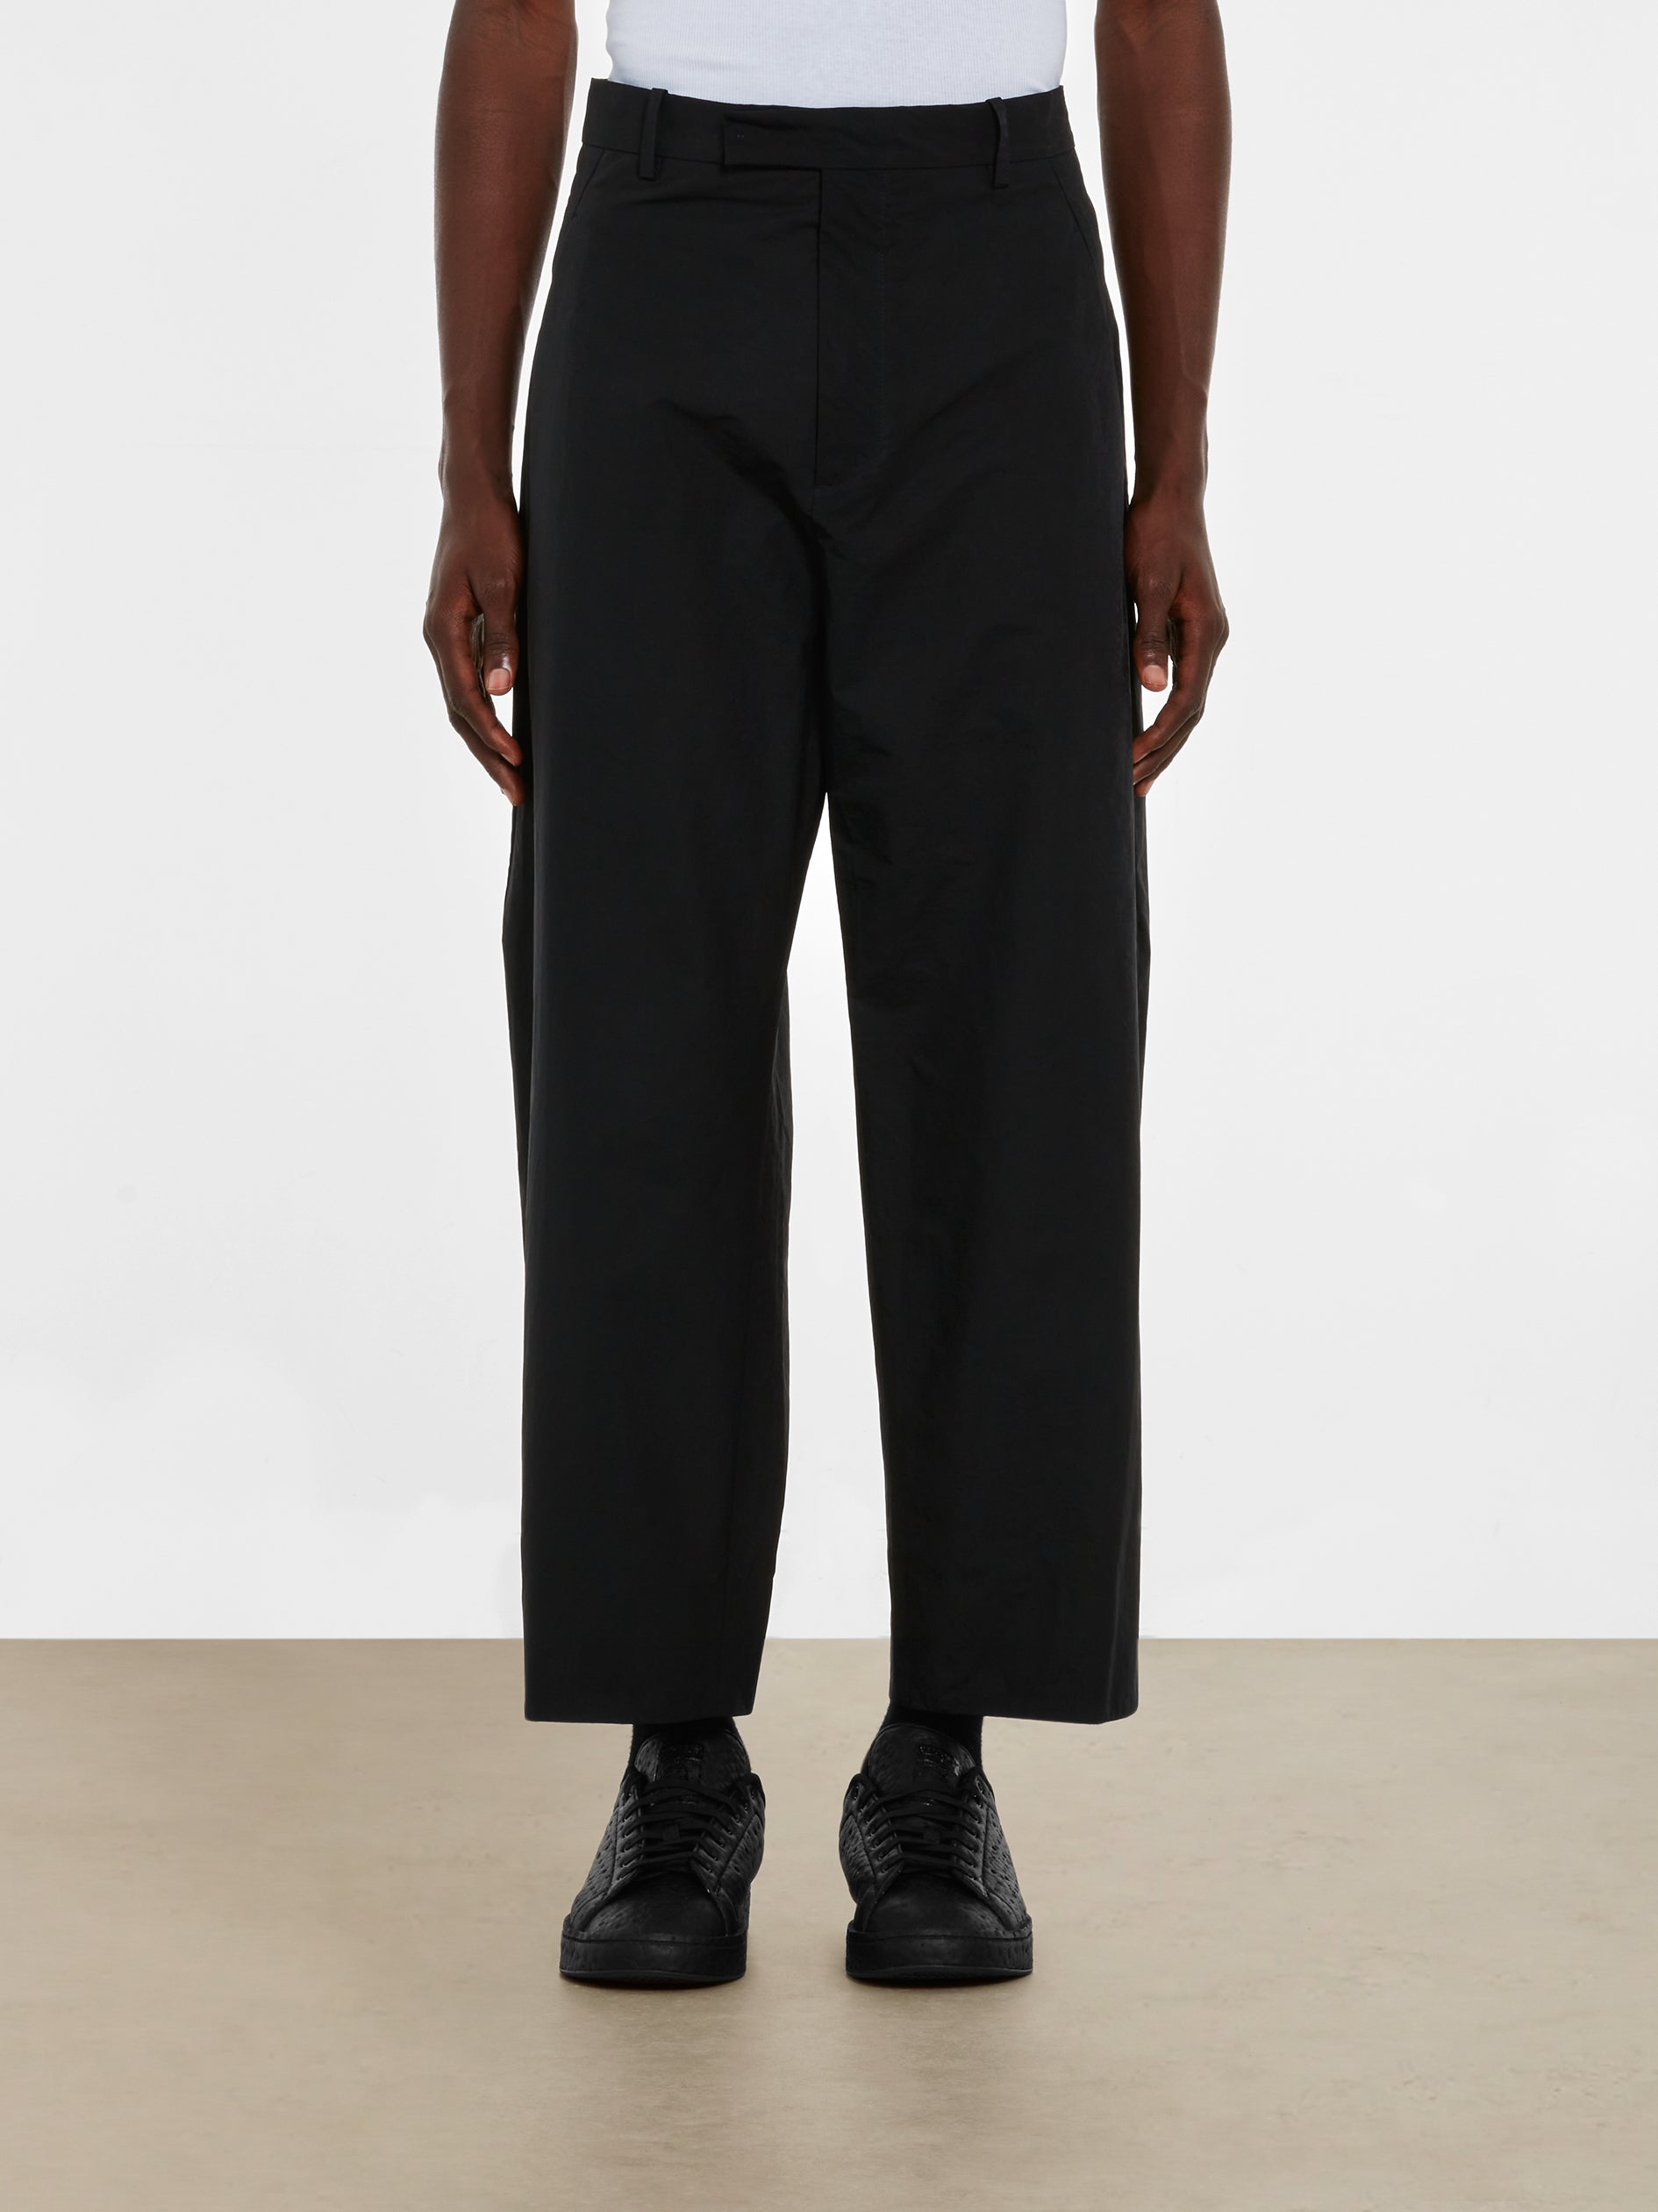 Craig Green - Men’s Uniform Wide Leg Trouser - (Black) view 1